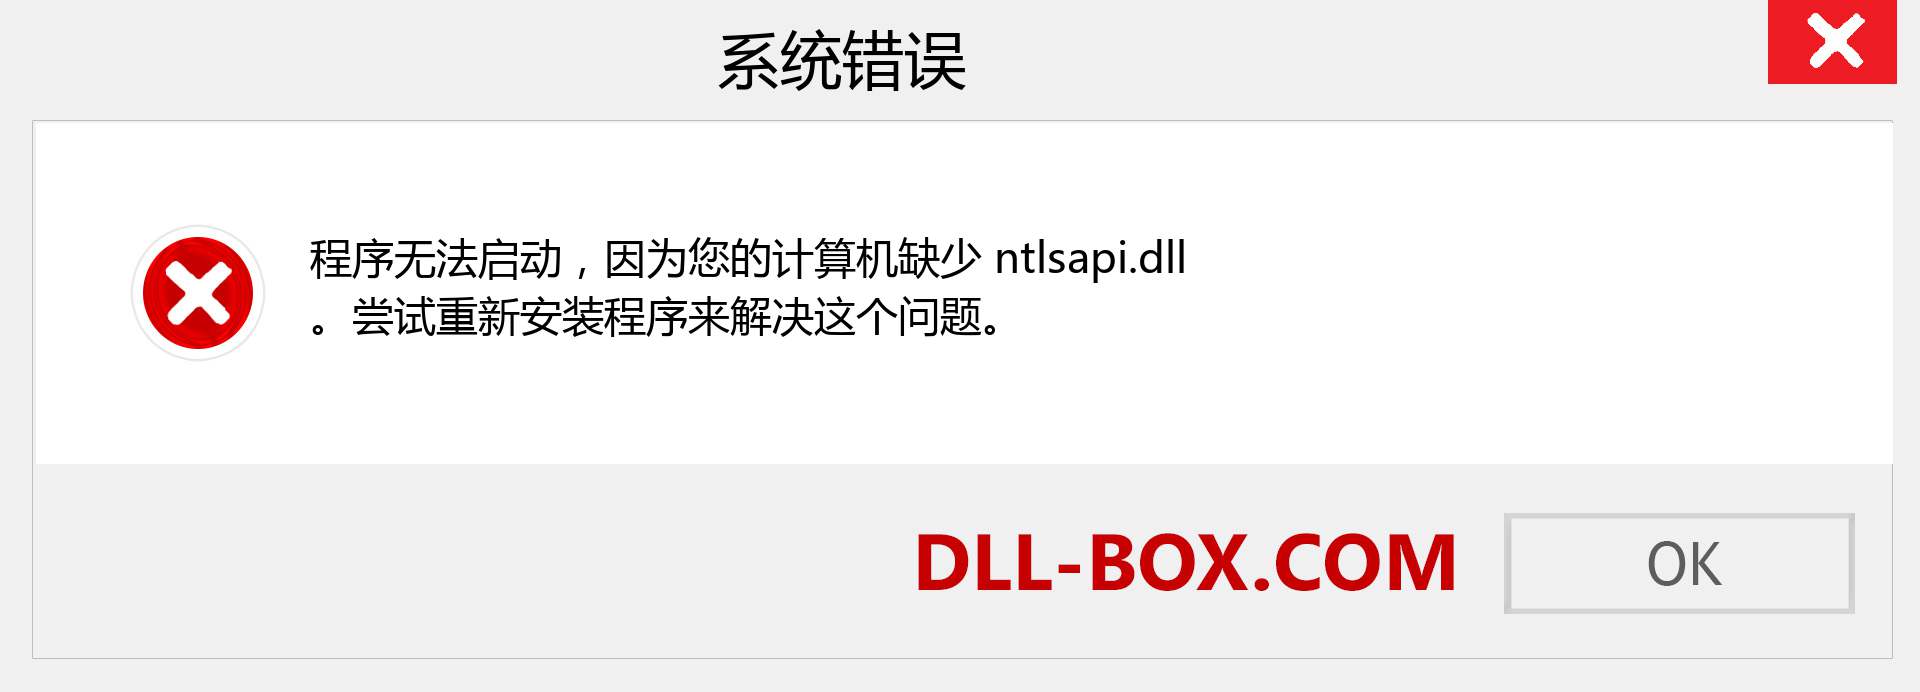 ntlsapi.dll 文件丢失？。 适用于 Windows 7、8、10 的下载 - 修复 Windows、照片、图像上的 ntlsapi dll 丢失错误